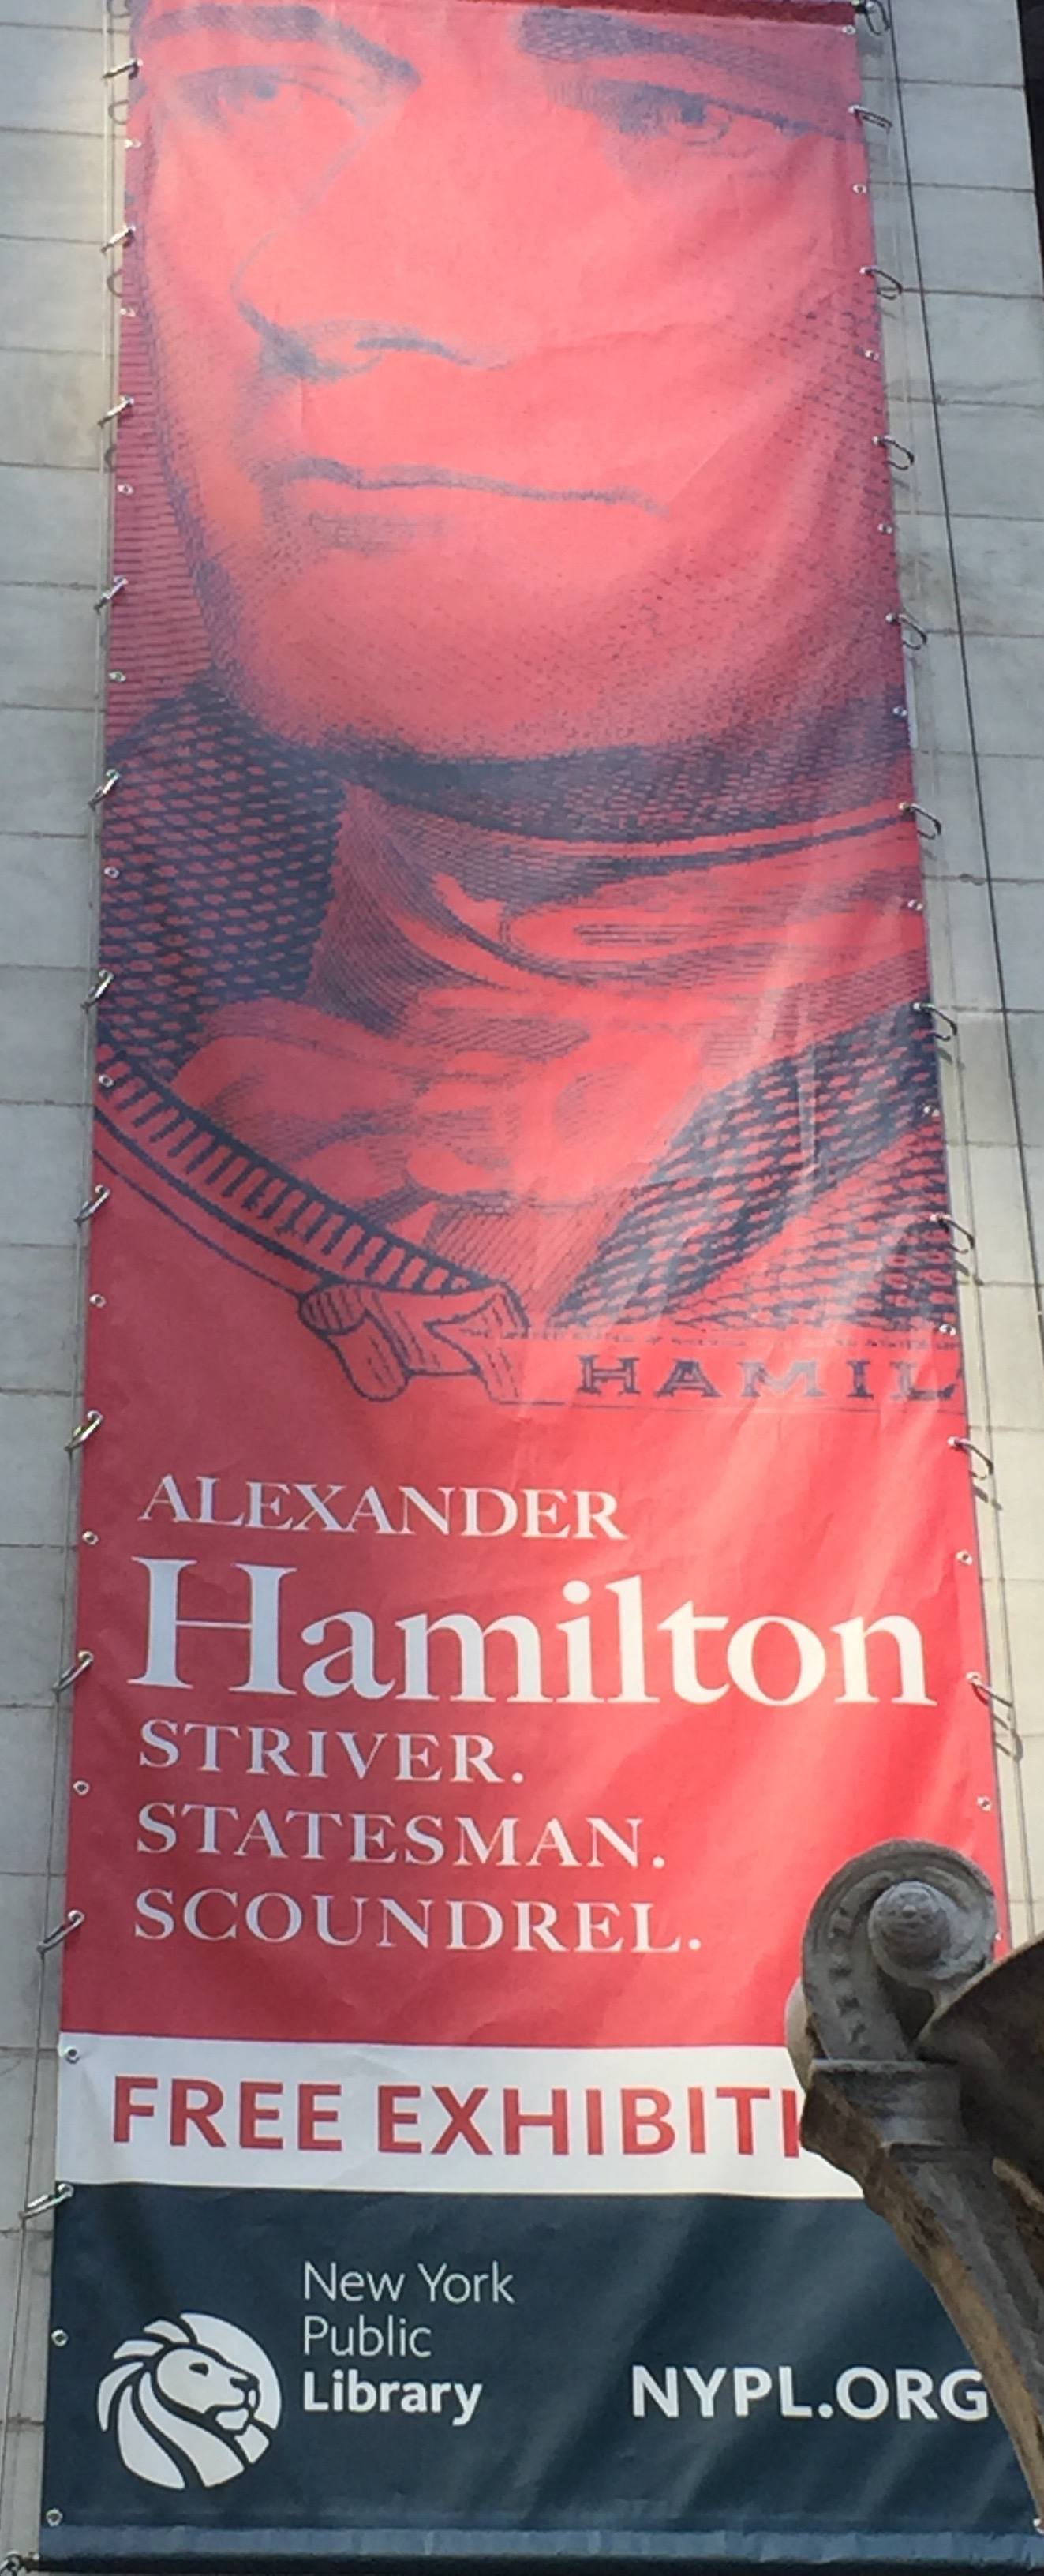 New York Public Library: Alexander Hamilton